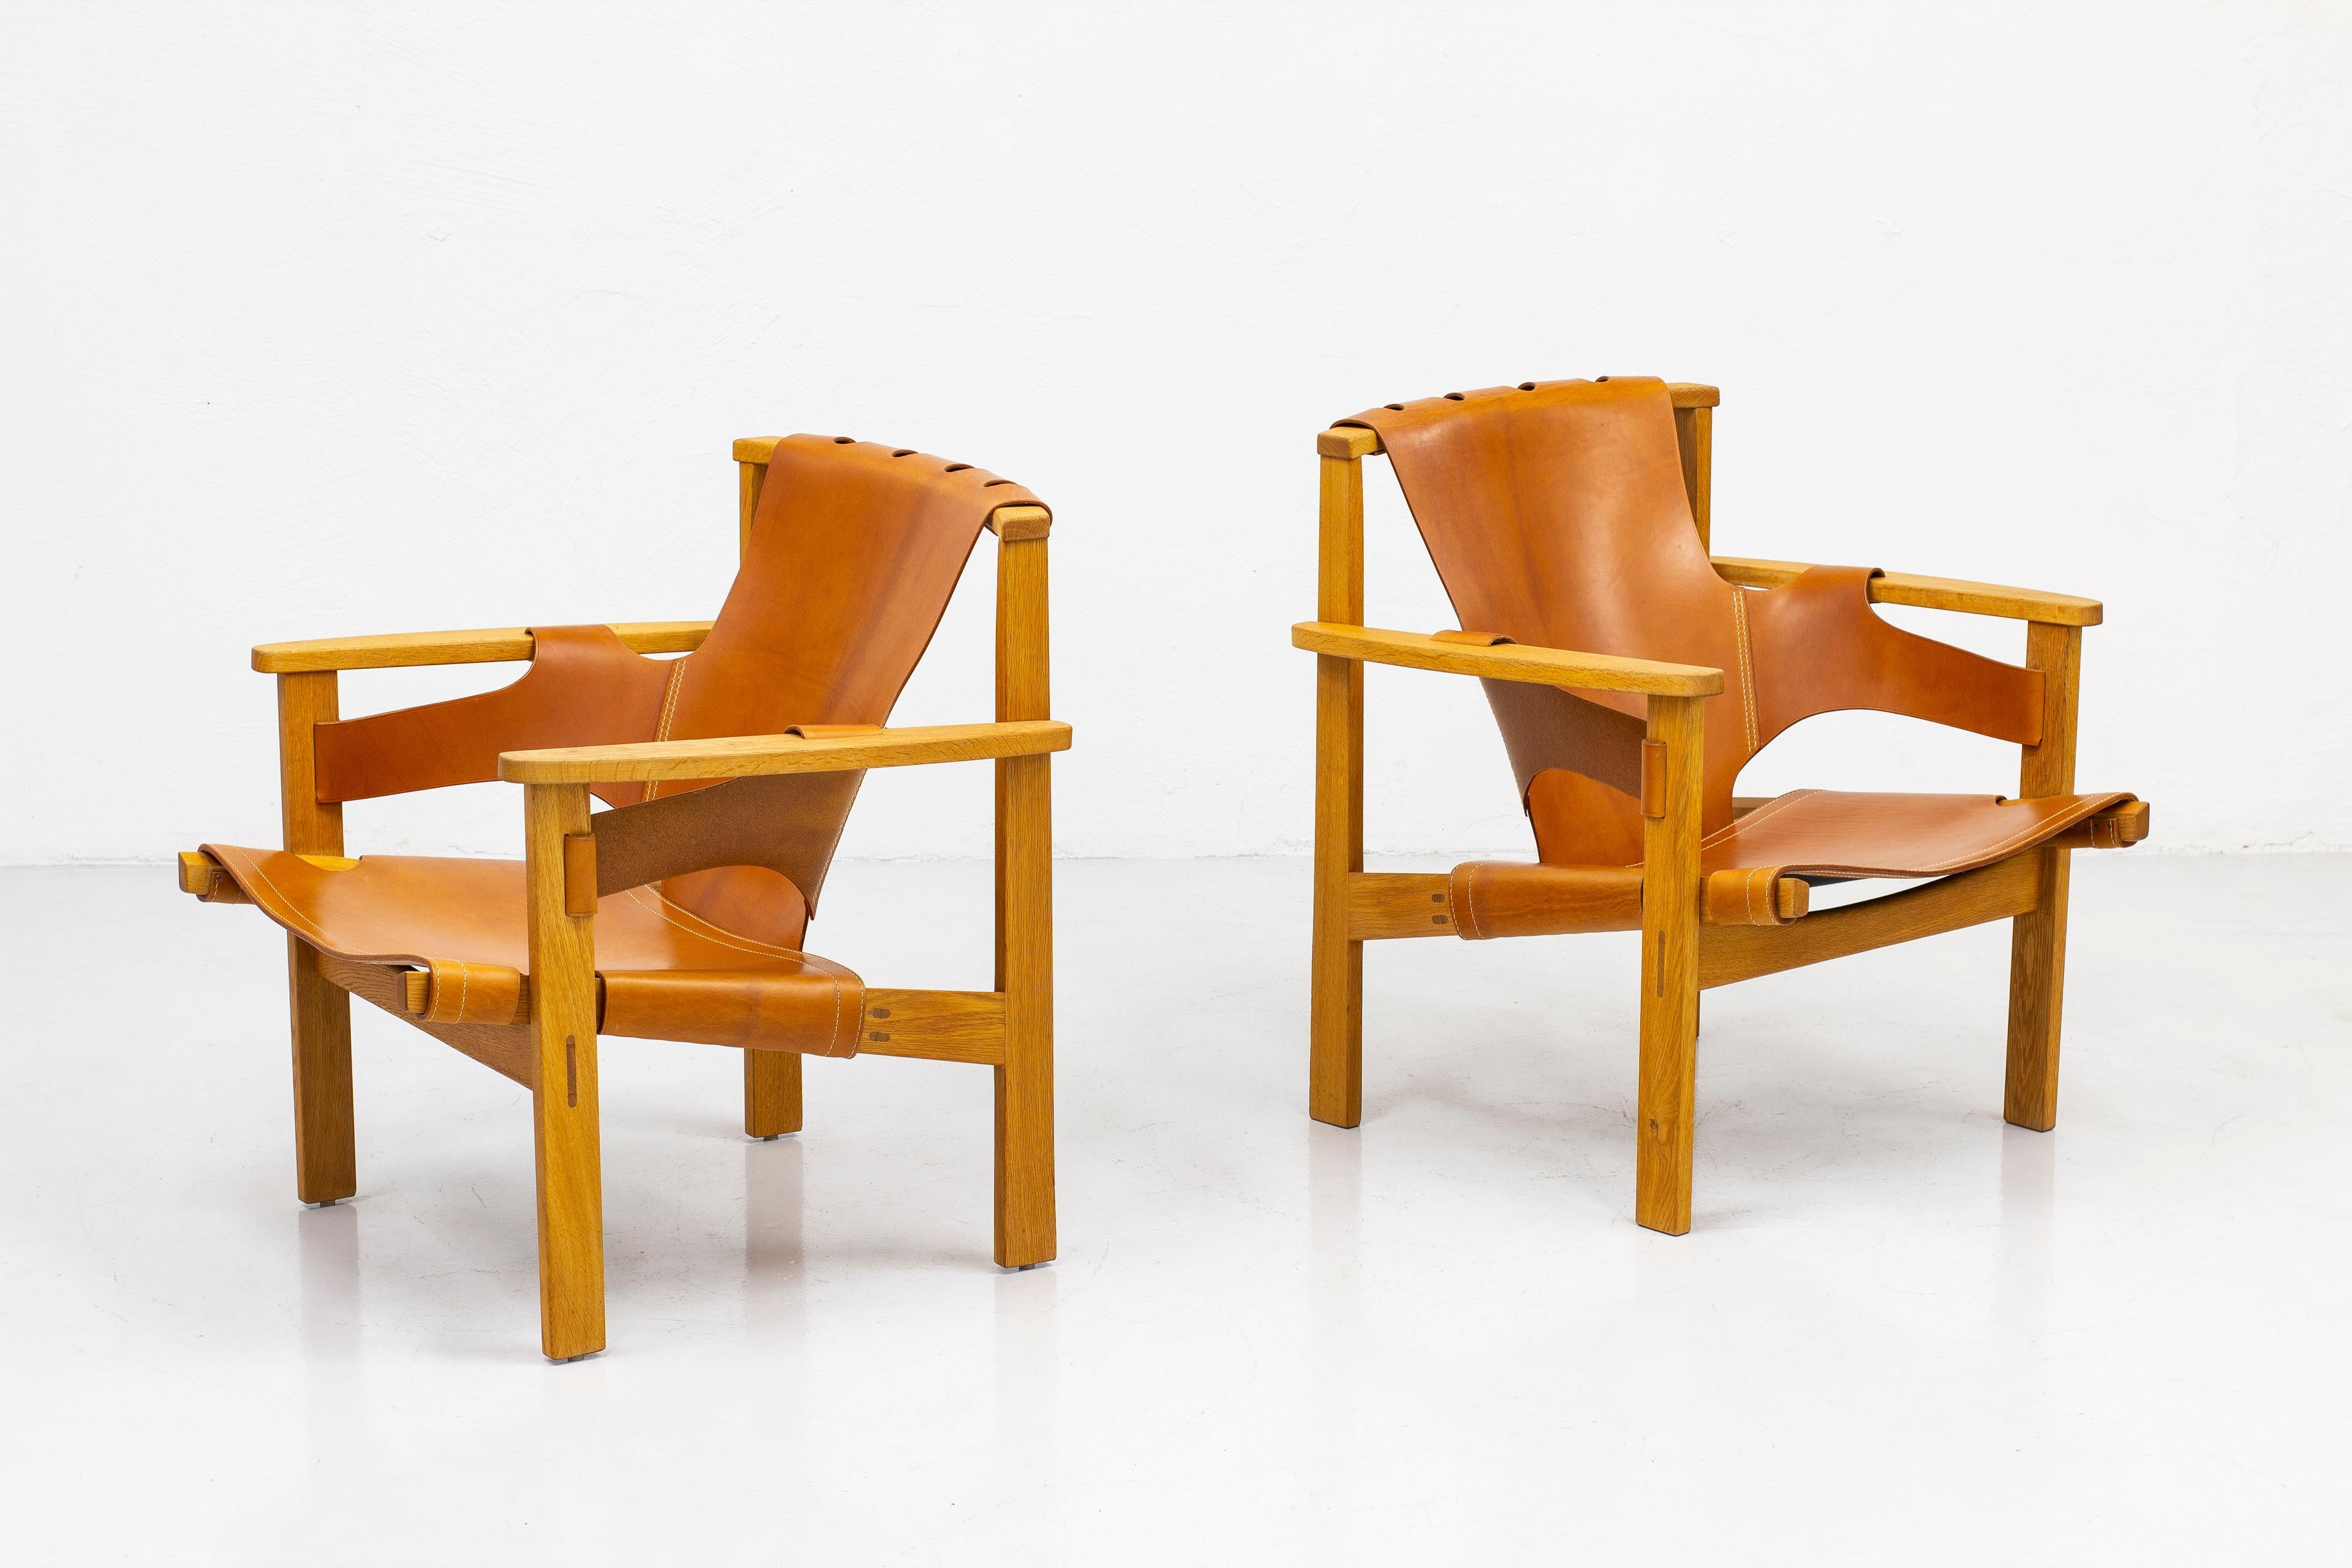 Scandinavian Modern Lounge Chairs in Oak and Leather by Carl-Axel Acking, Nk, Nordiska Kompaniet